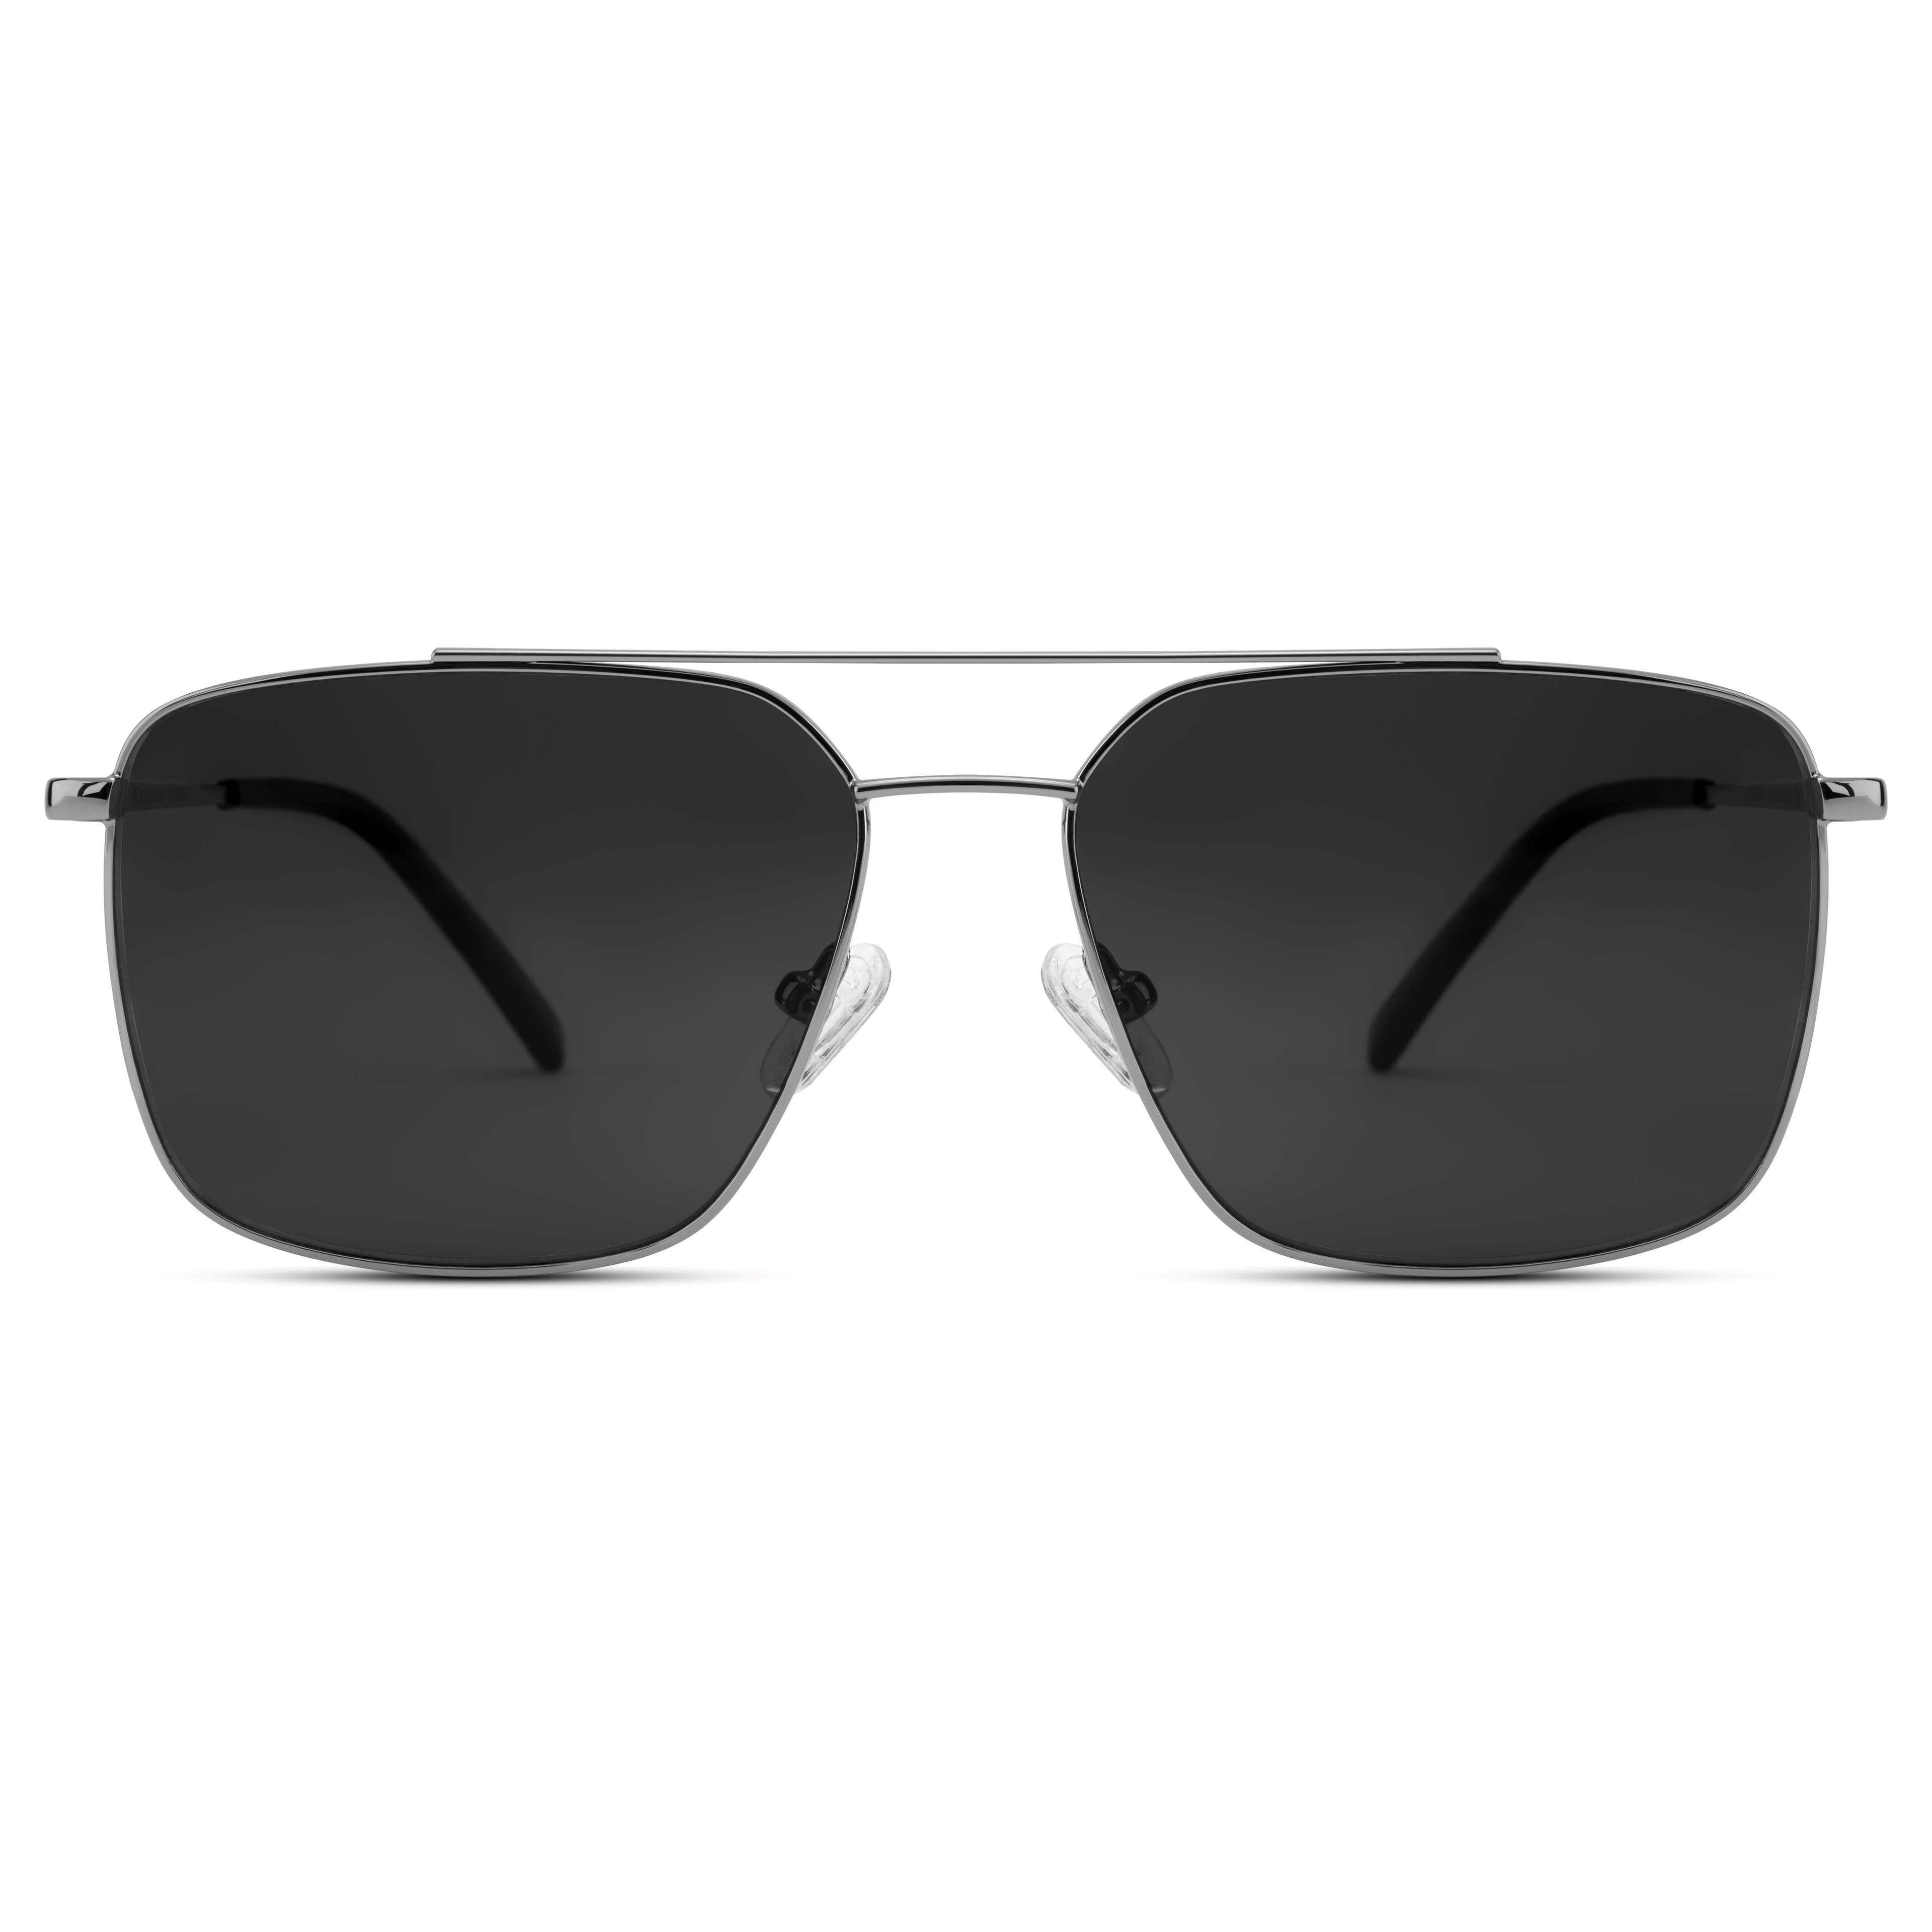 Occasus | Black Square Polarized Aviator Sunglasses